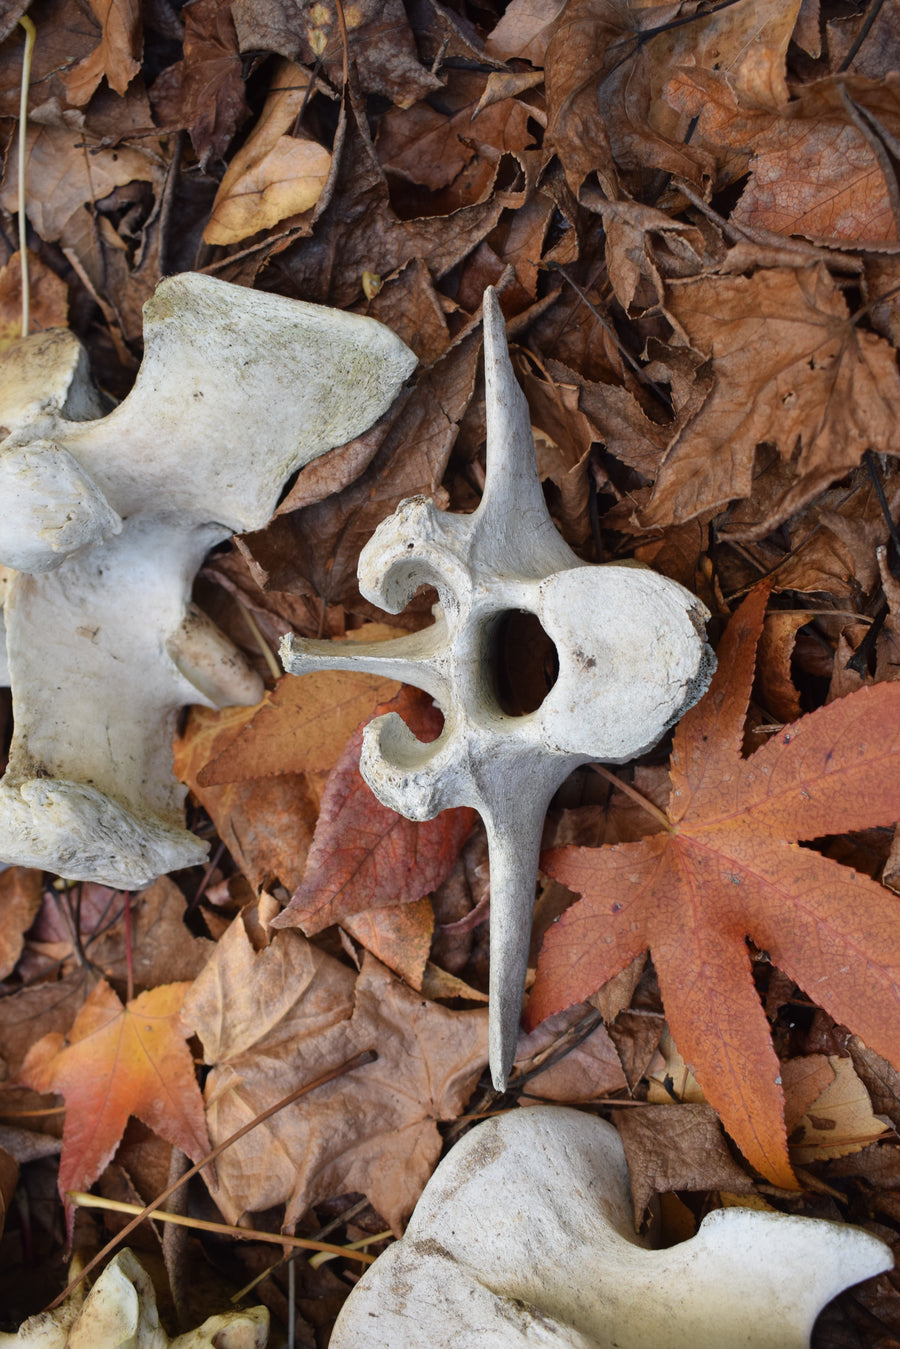 Group of real cow vertebrae bones on autumn leaves